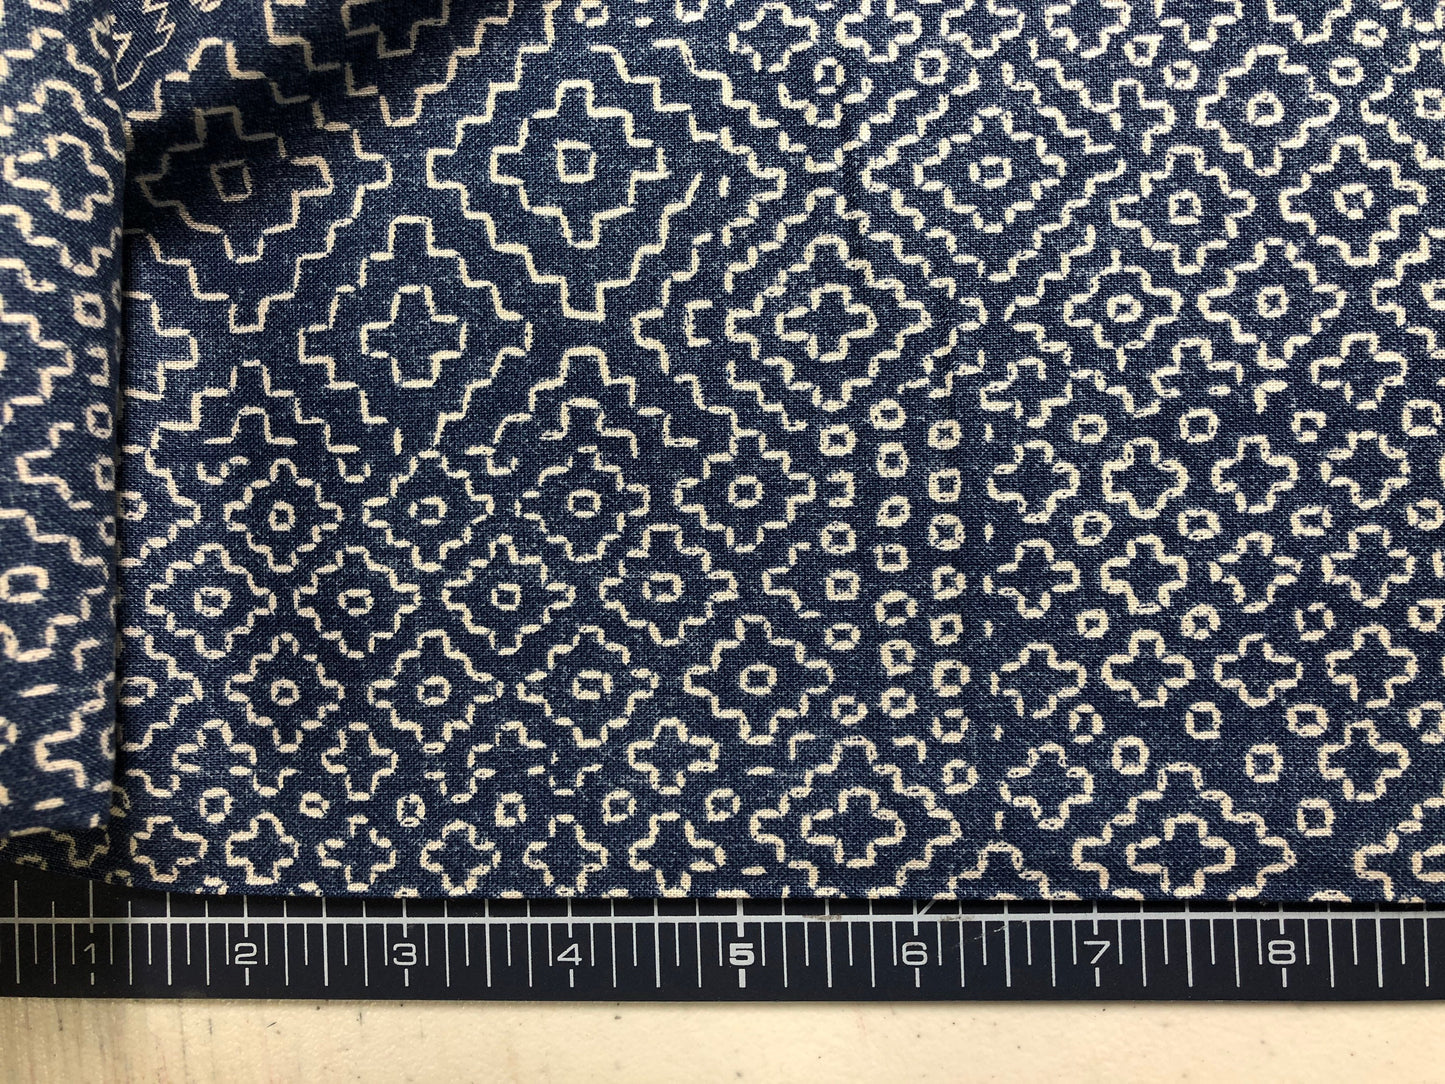 SASHIKO Stitch Sampler Denim 51811-3 Windham Fabrics, Whistler Studios, Quilt Fabric, Japanese, Quilting, Cotton Fabric, Fabric By The Yard